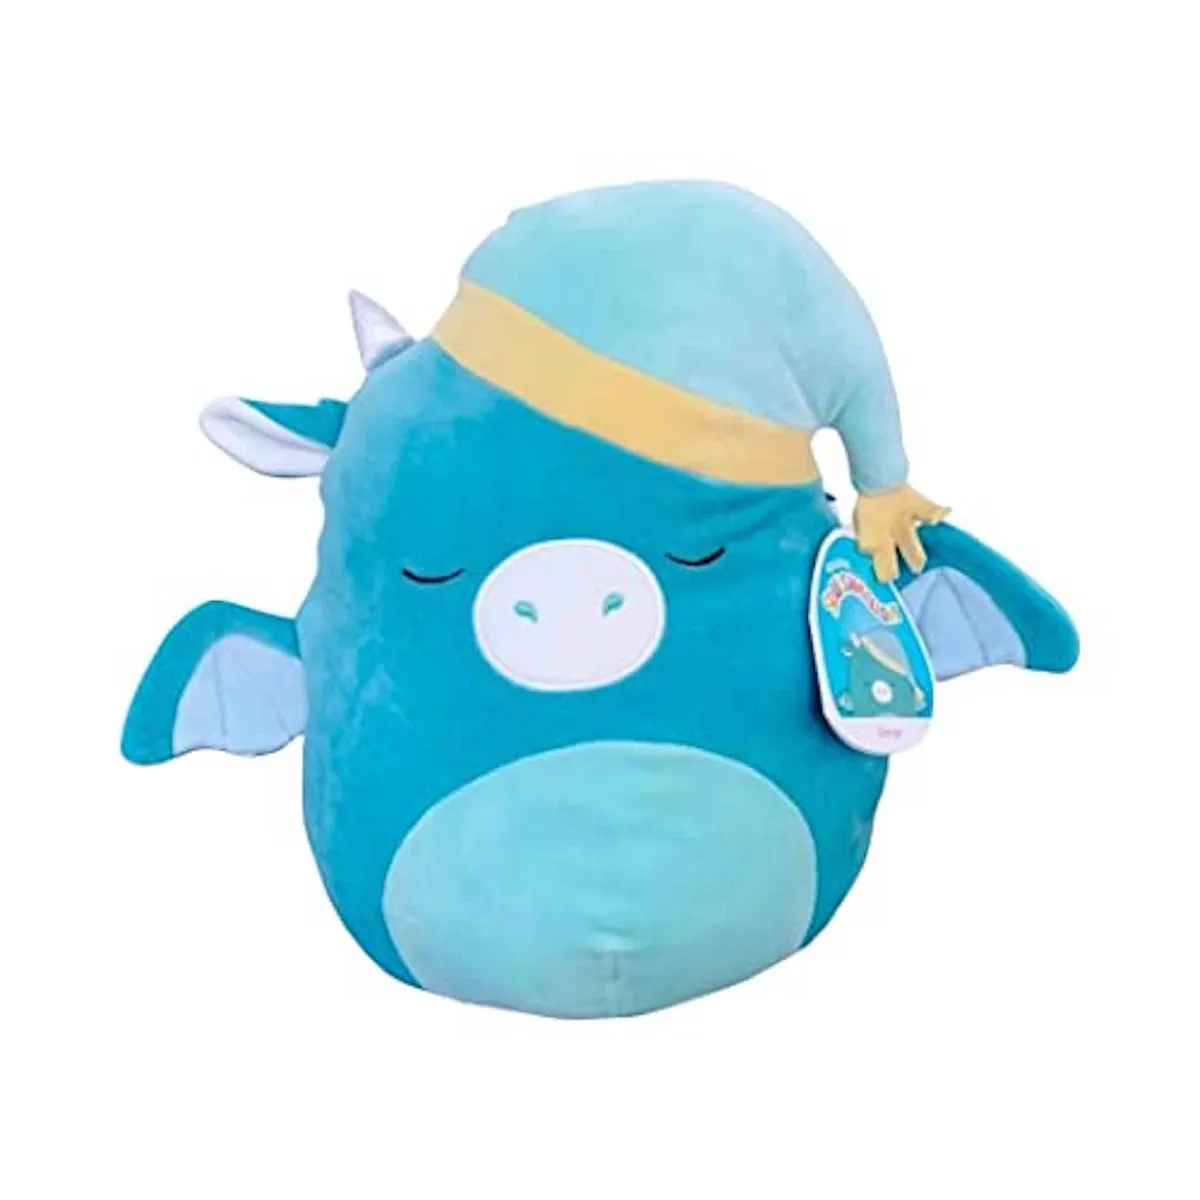 A blue dragon Squishmallow wearing a nightcap